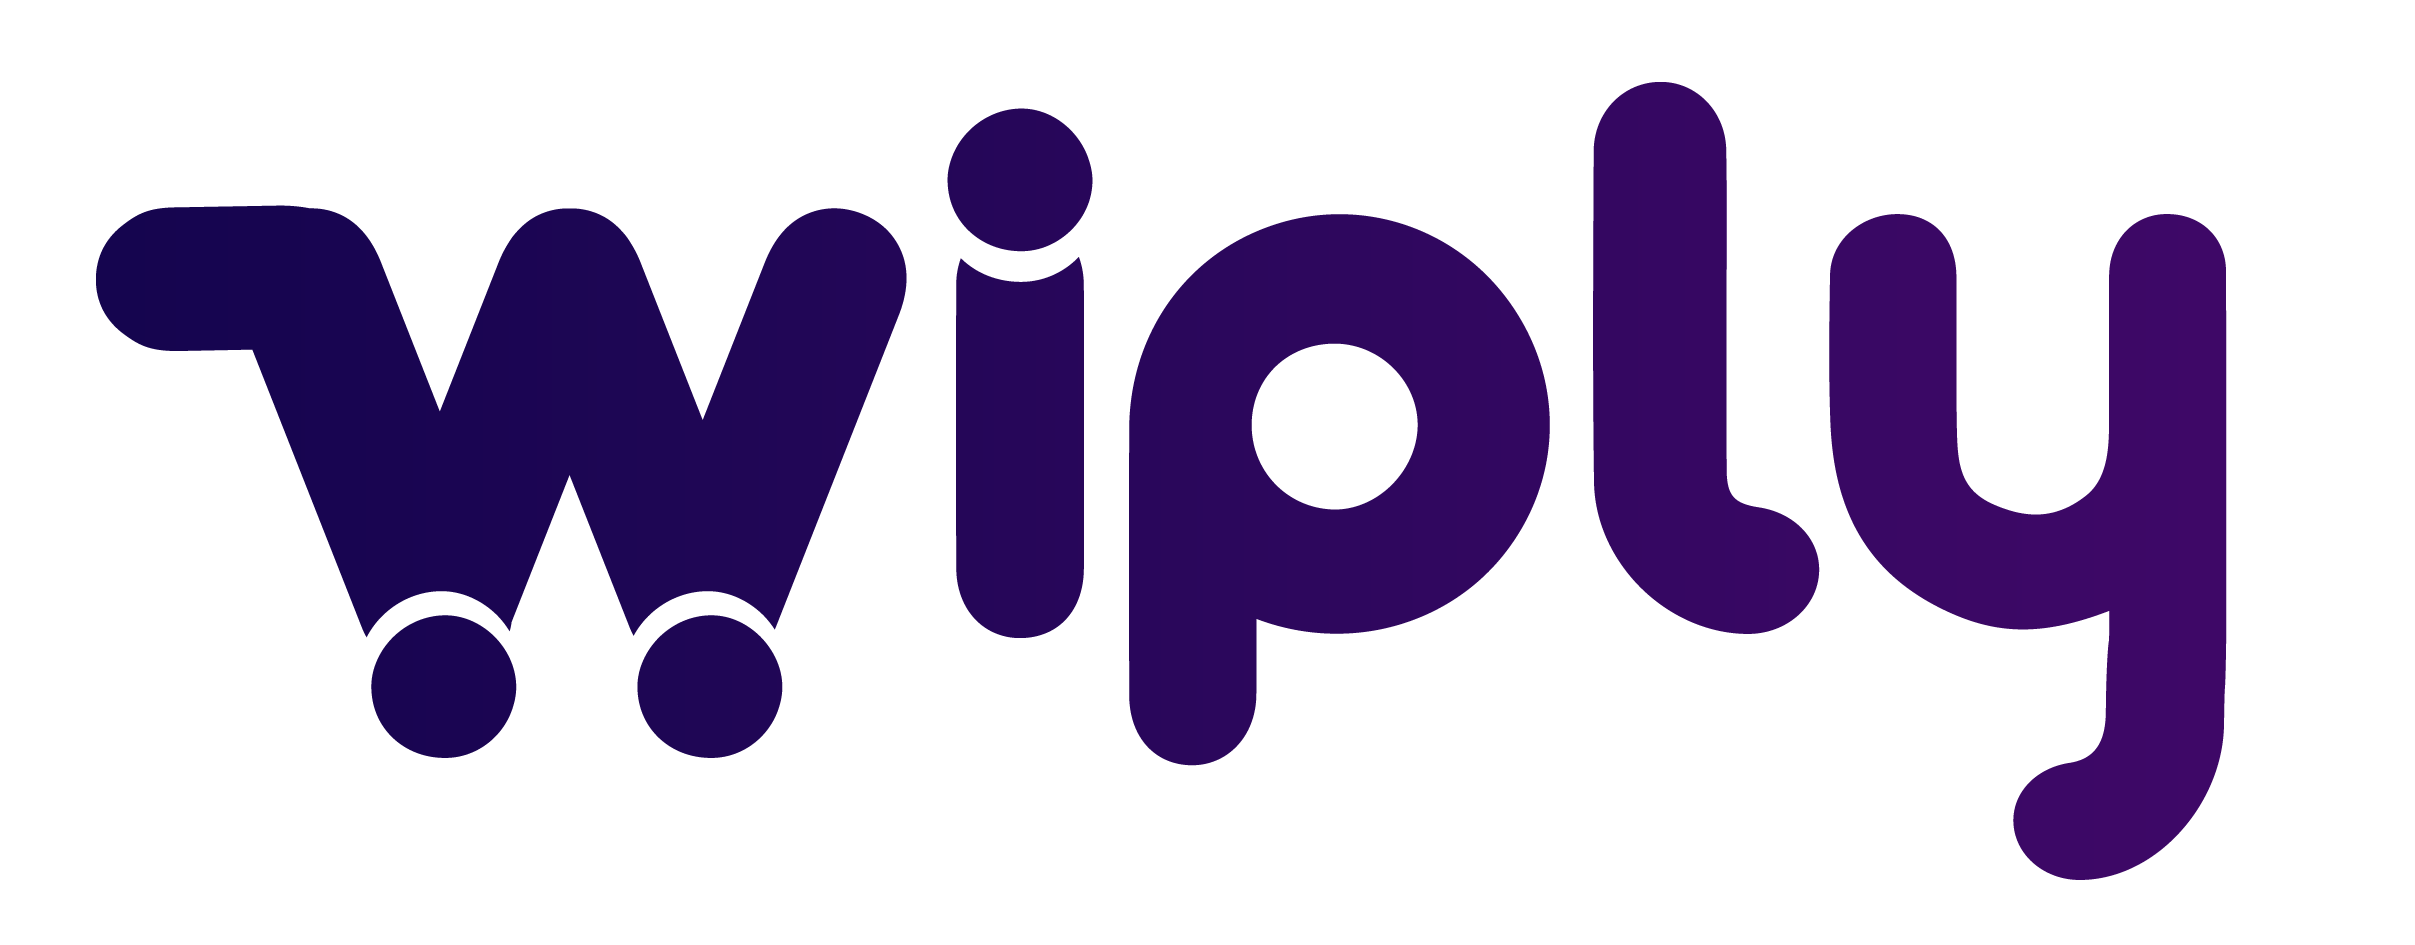 Wiply logo